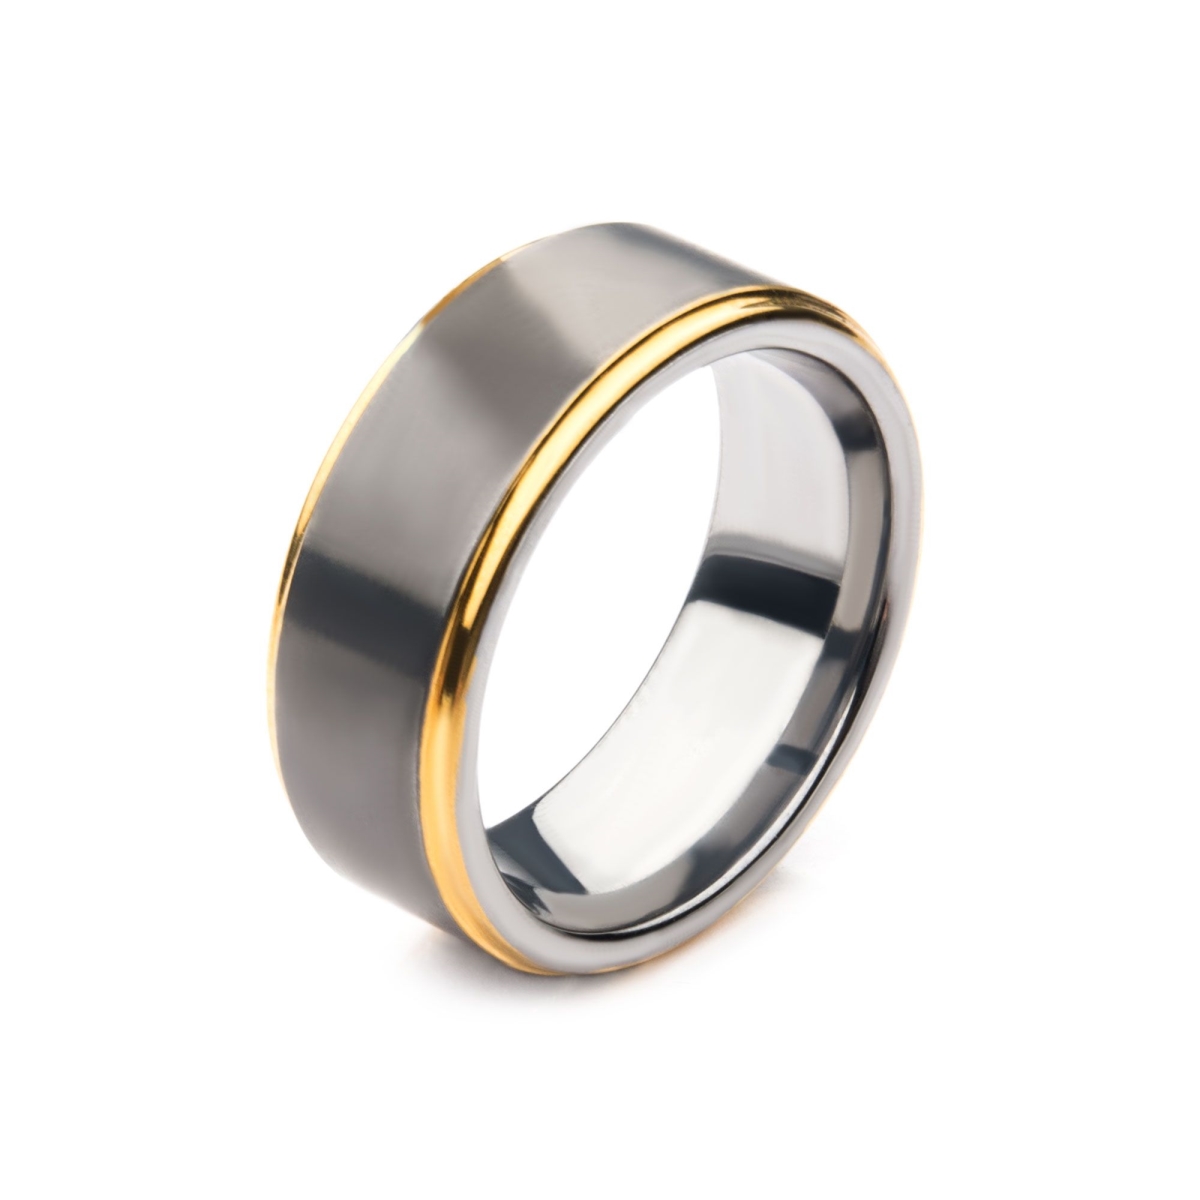 Mens Wedding Band Ring, Gun Metal With Gold Ip Edge Steel - Size 10